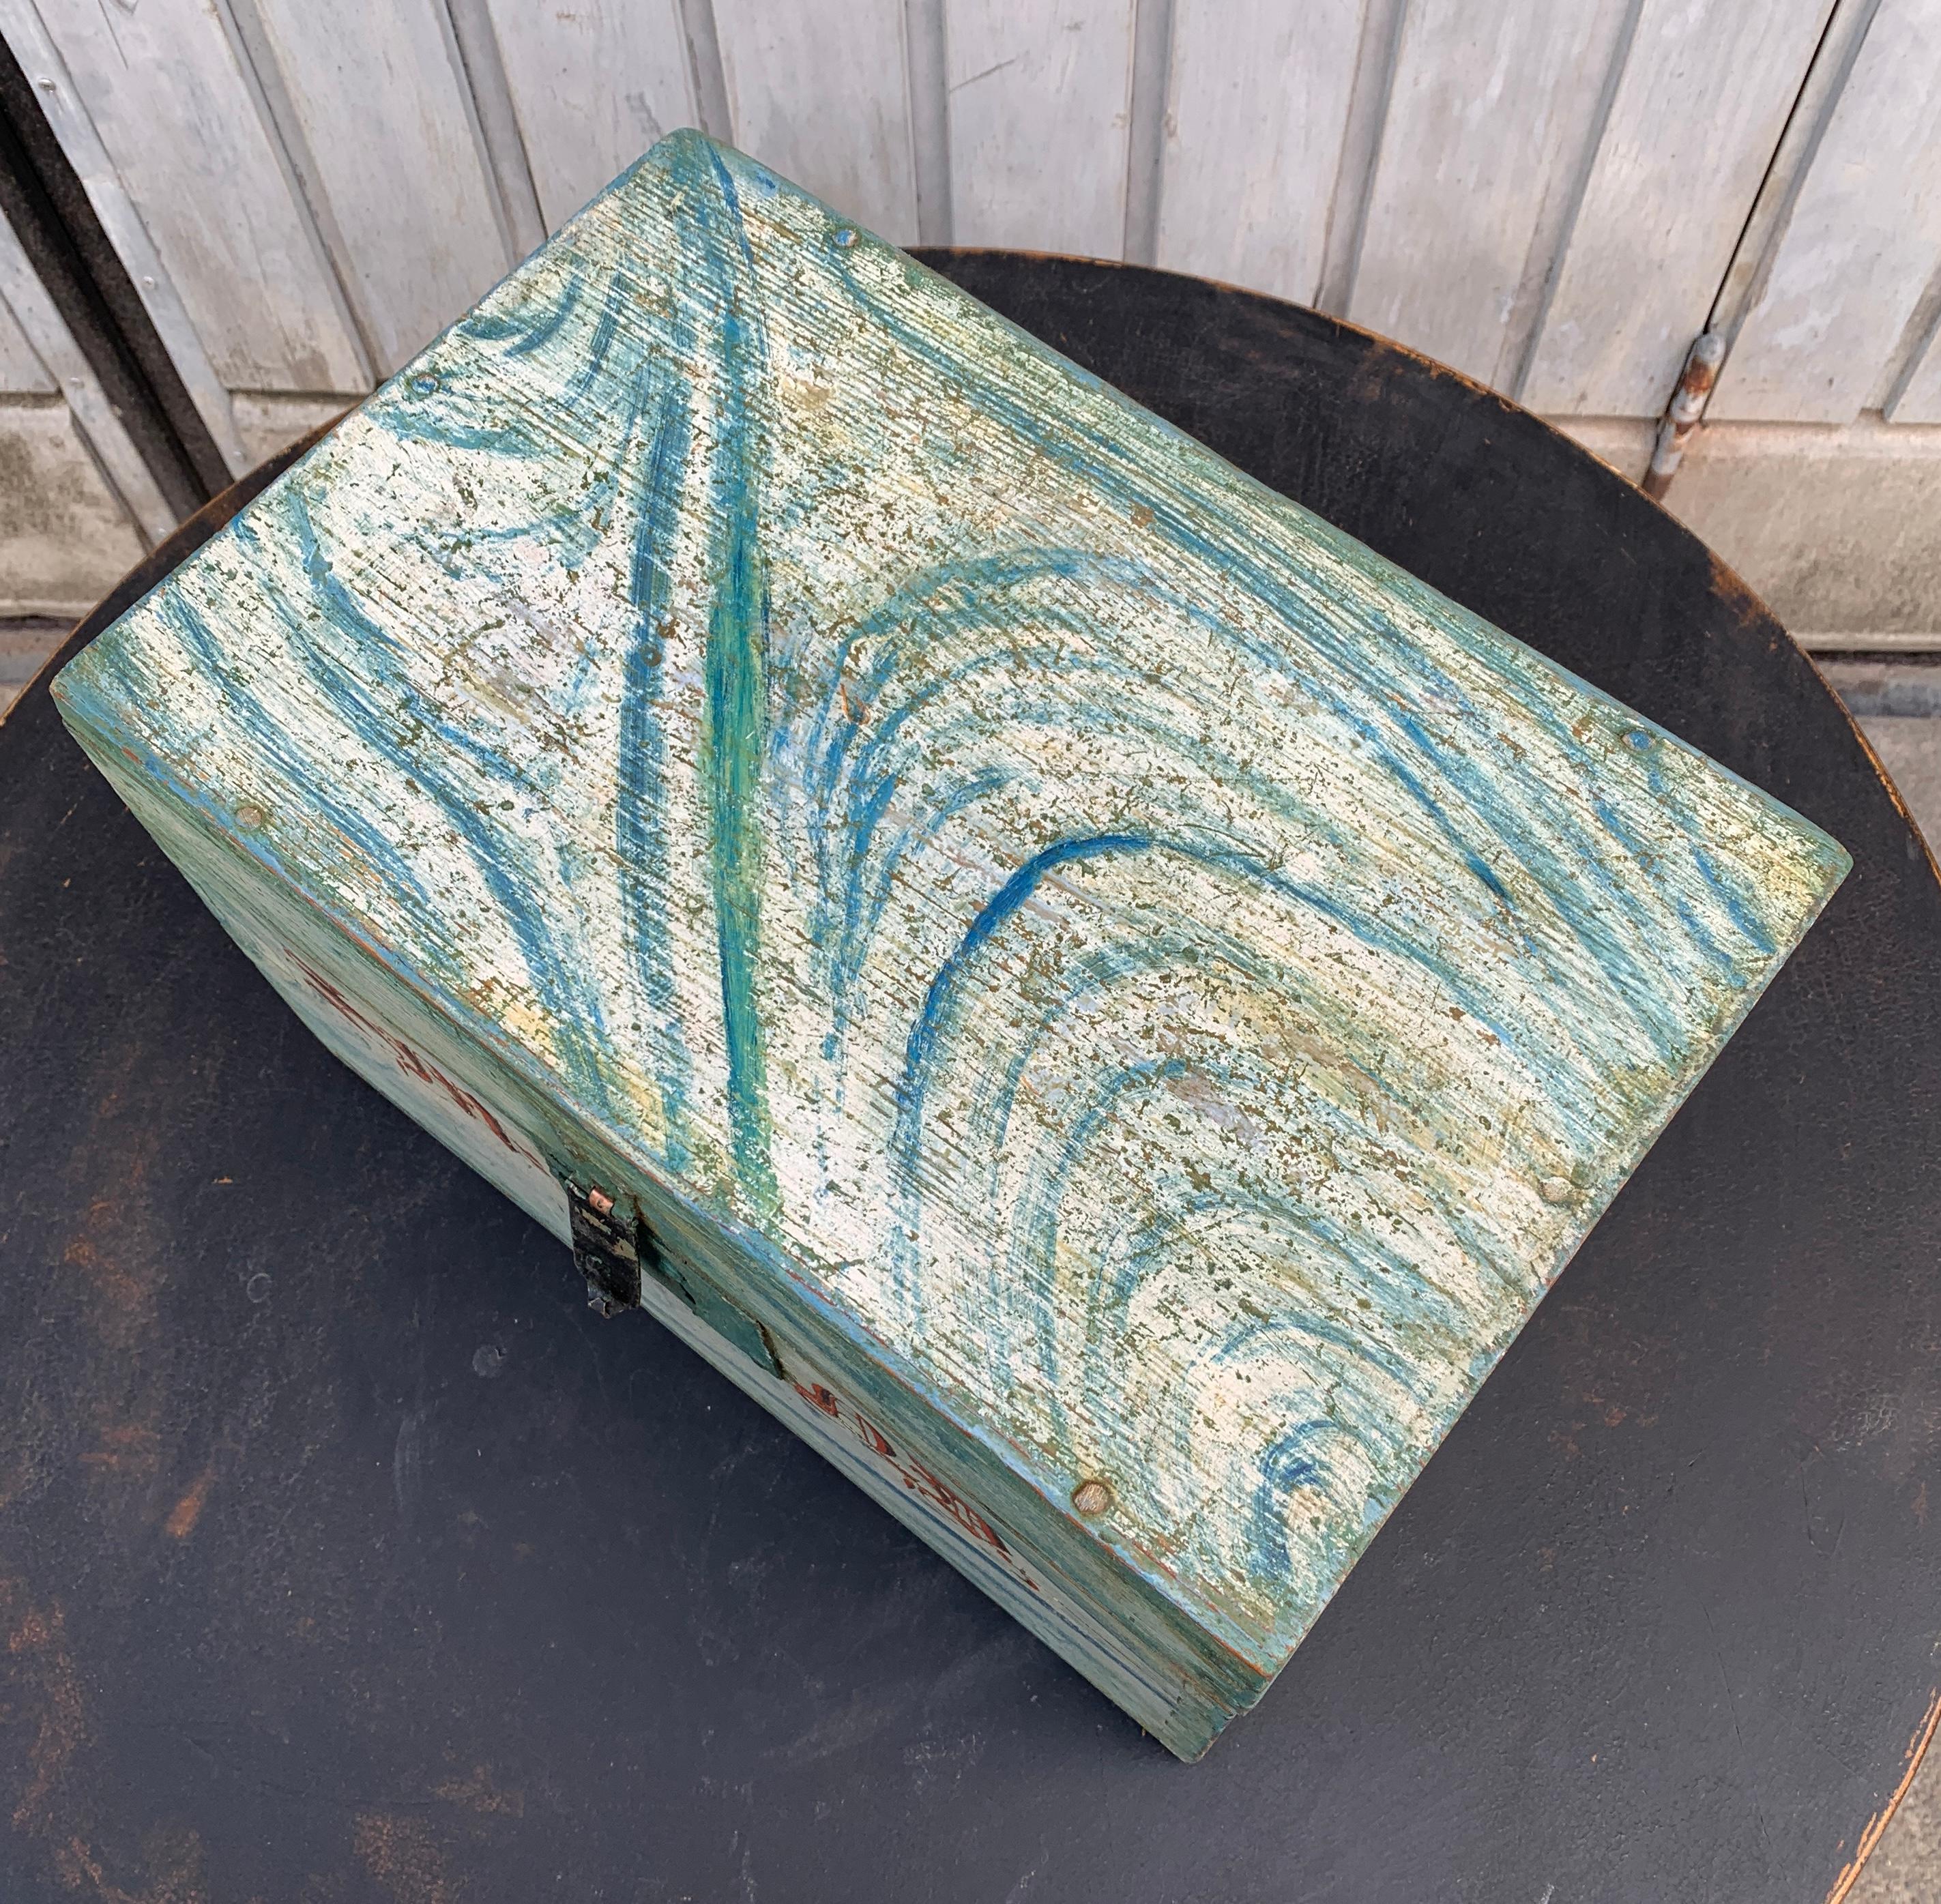 Pine Swedish Faux Marble Hand-Painted Wooden Folk Art Box